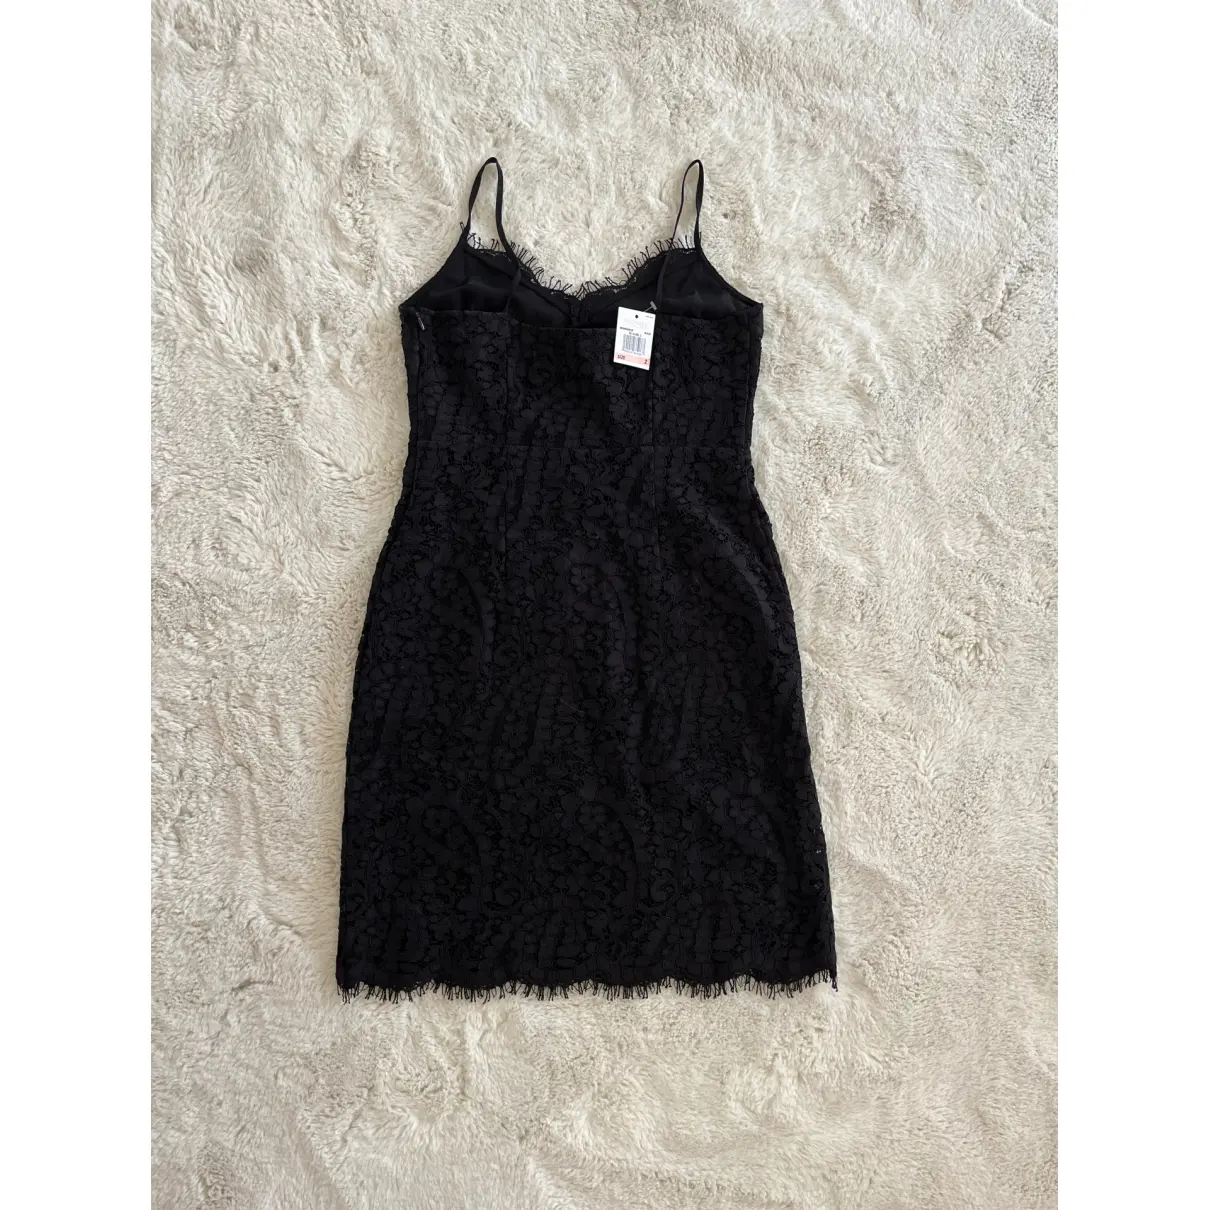 Buy Michael Kors Lace mid-length dress online